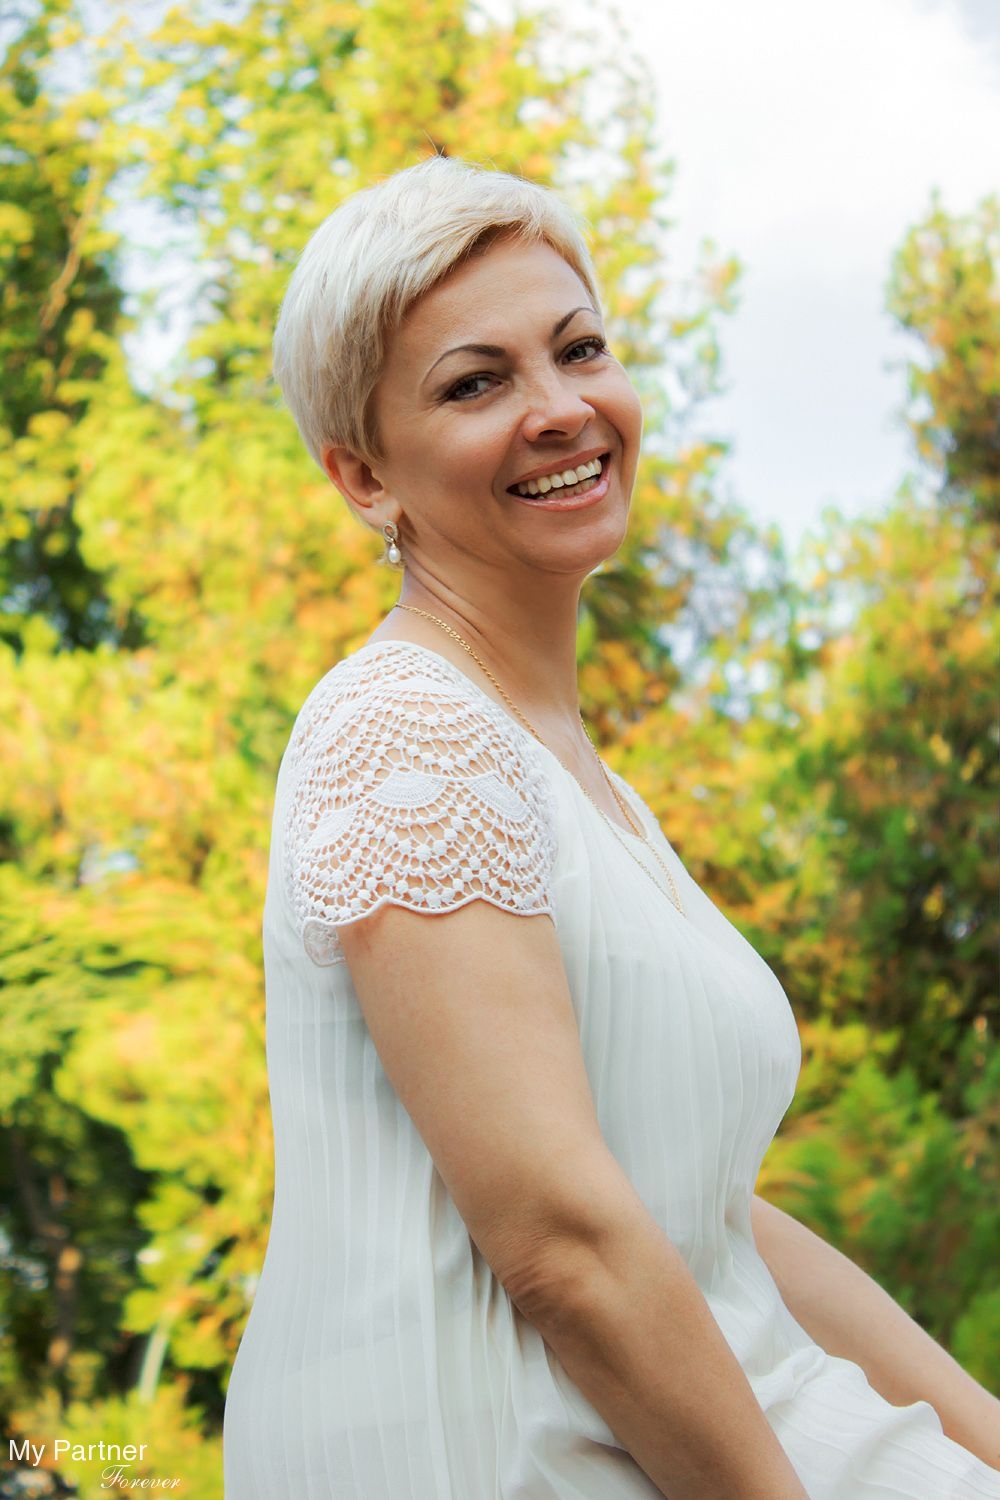 Meet Charming Ukrainian Woman Valentina from Kharkov, Ukraine